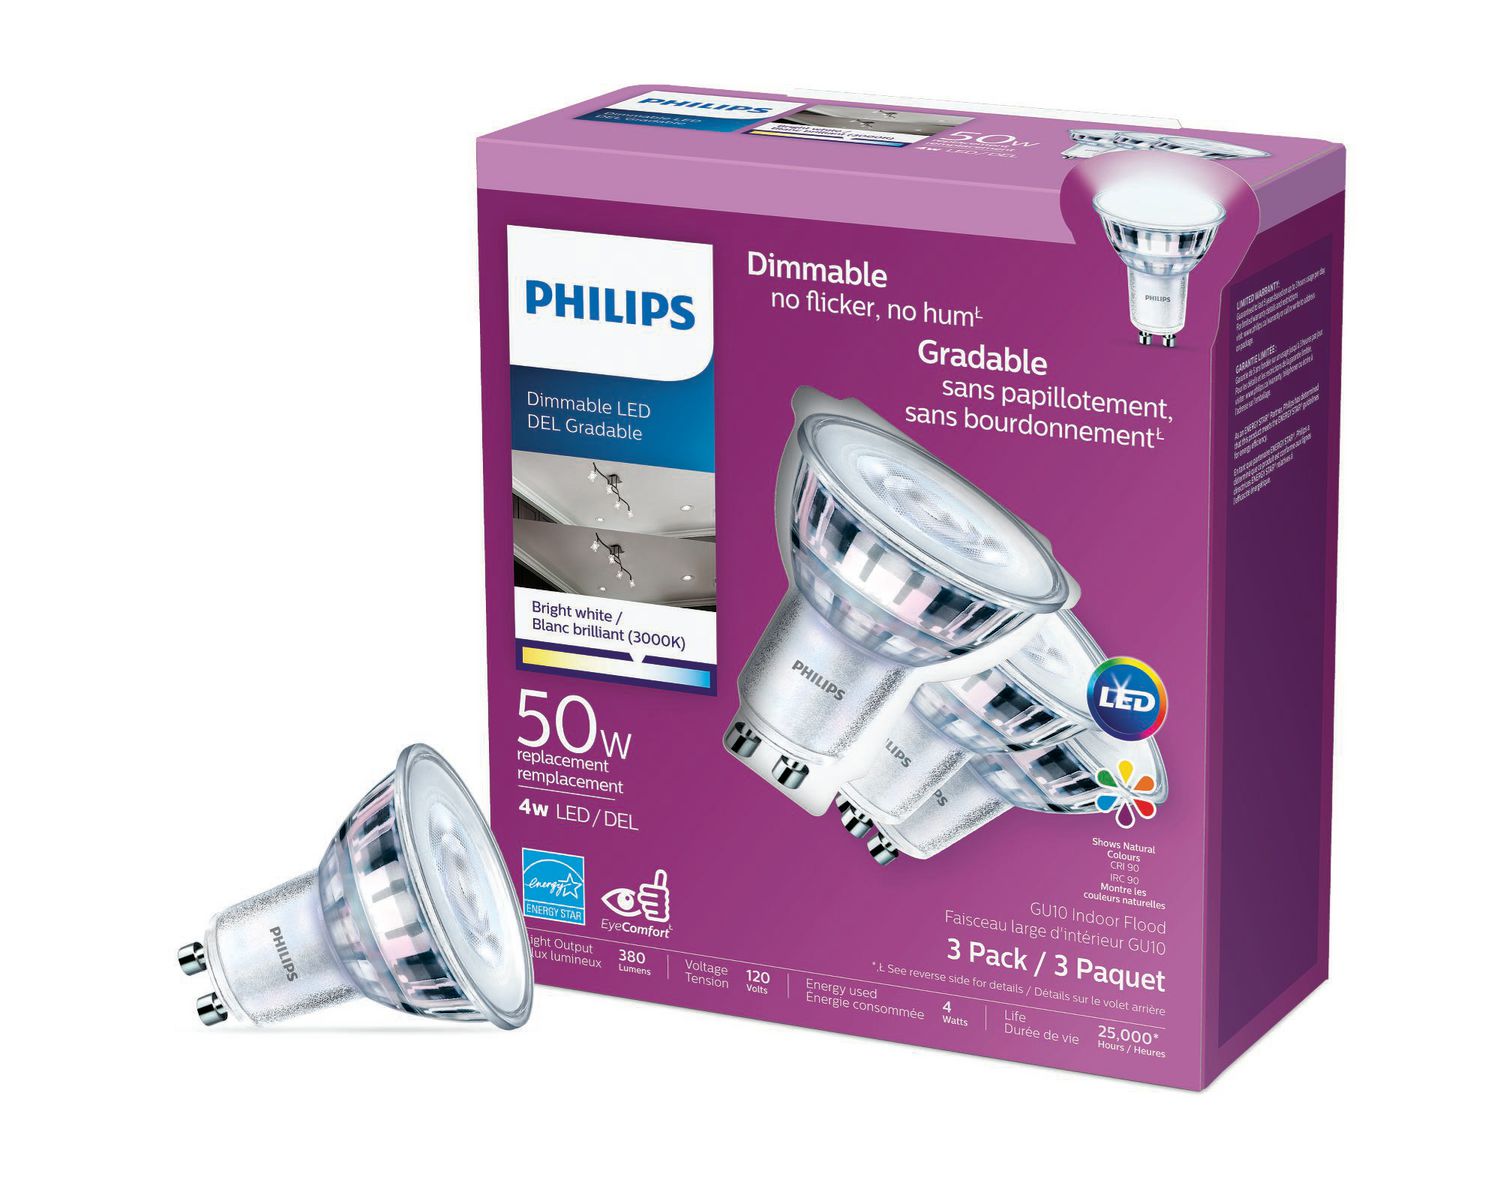 Philips LED Classic 3.1-25W GU10 blanc chaud 